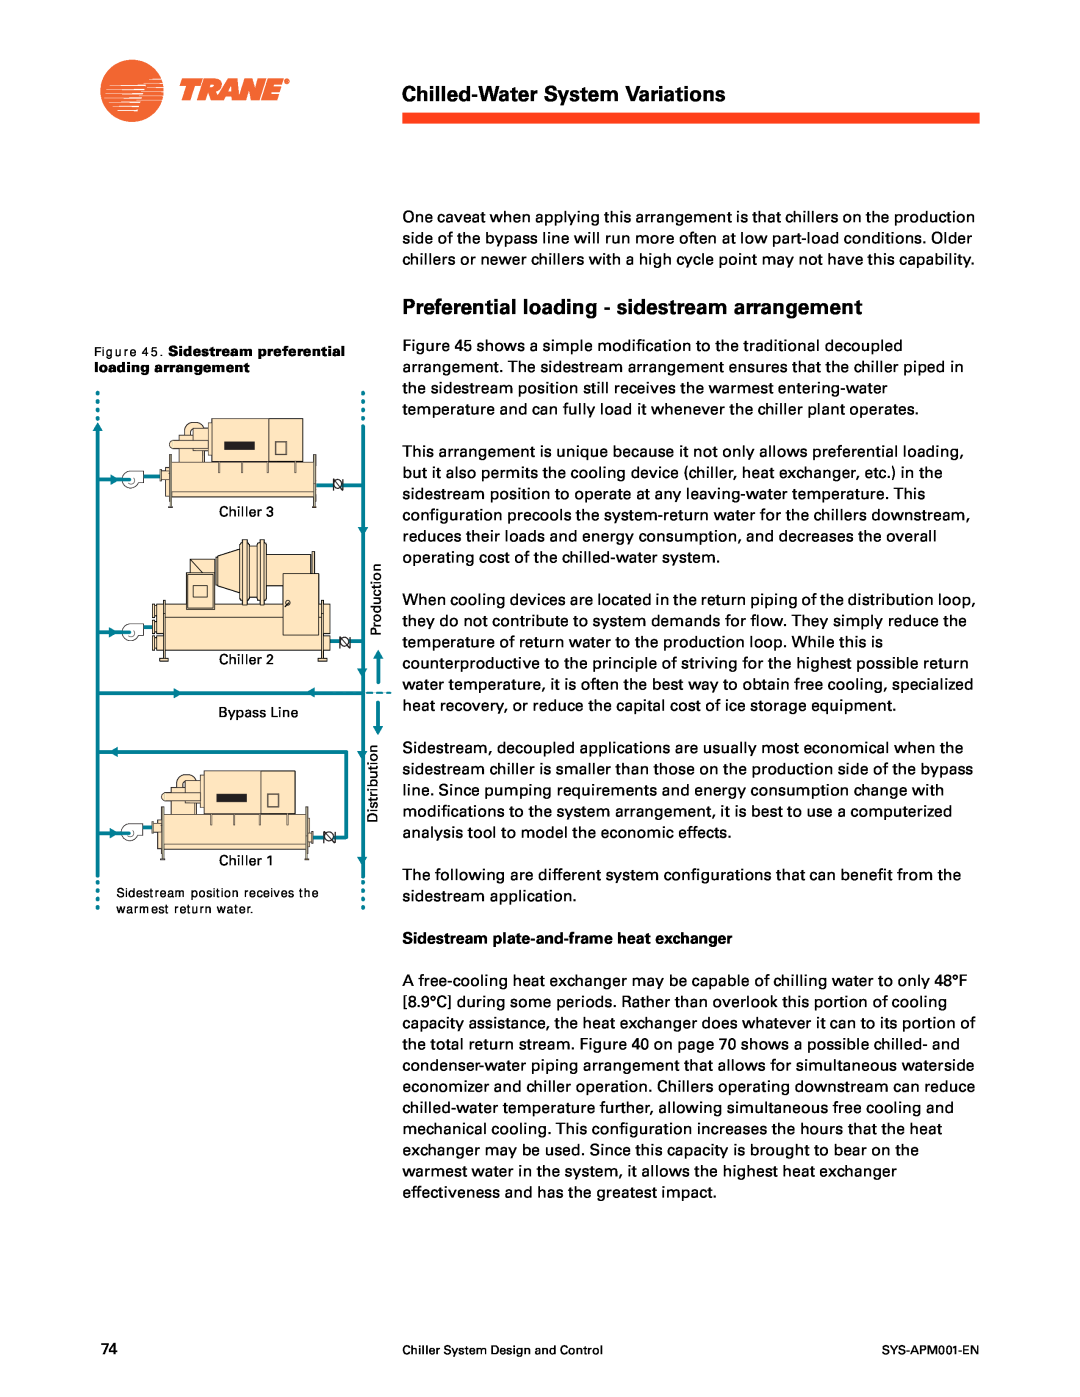 Trane SYS-APM001-EN manual Preferential loading - sidestream arrangement, Chilled-Water System Variations 